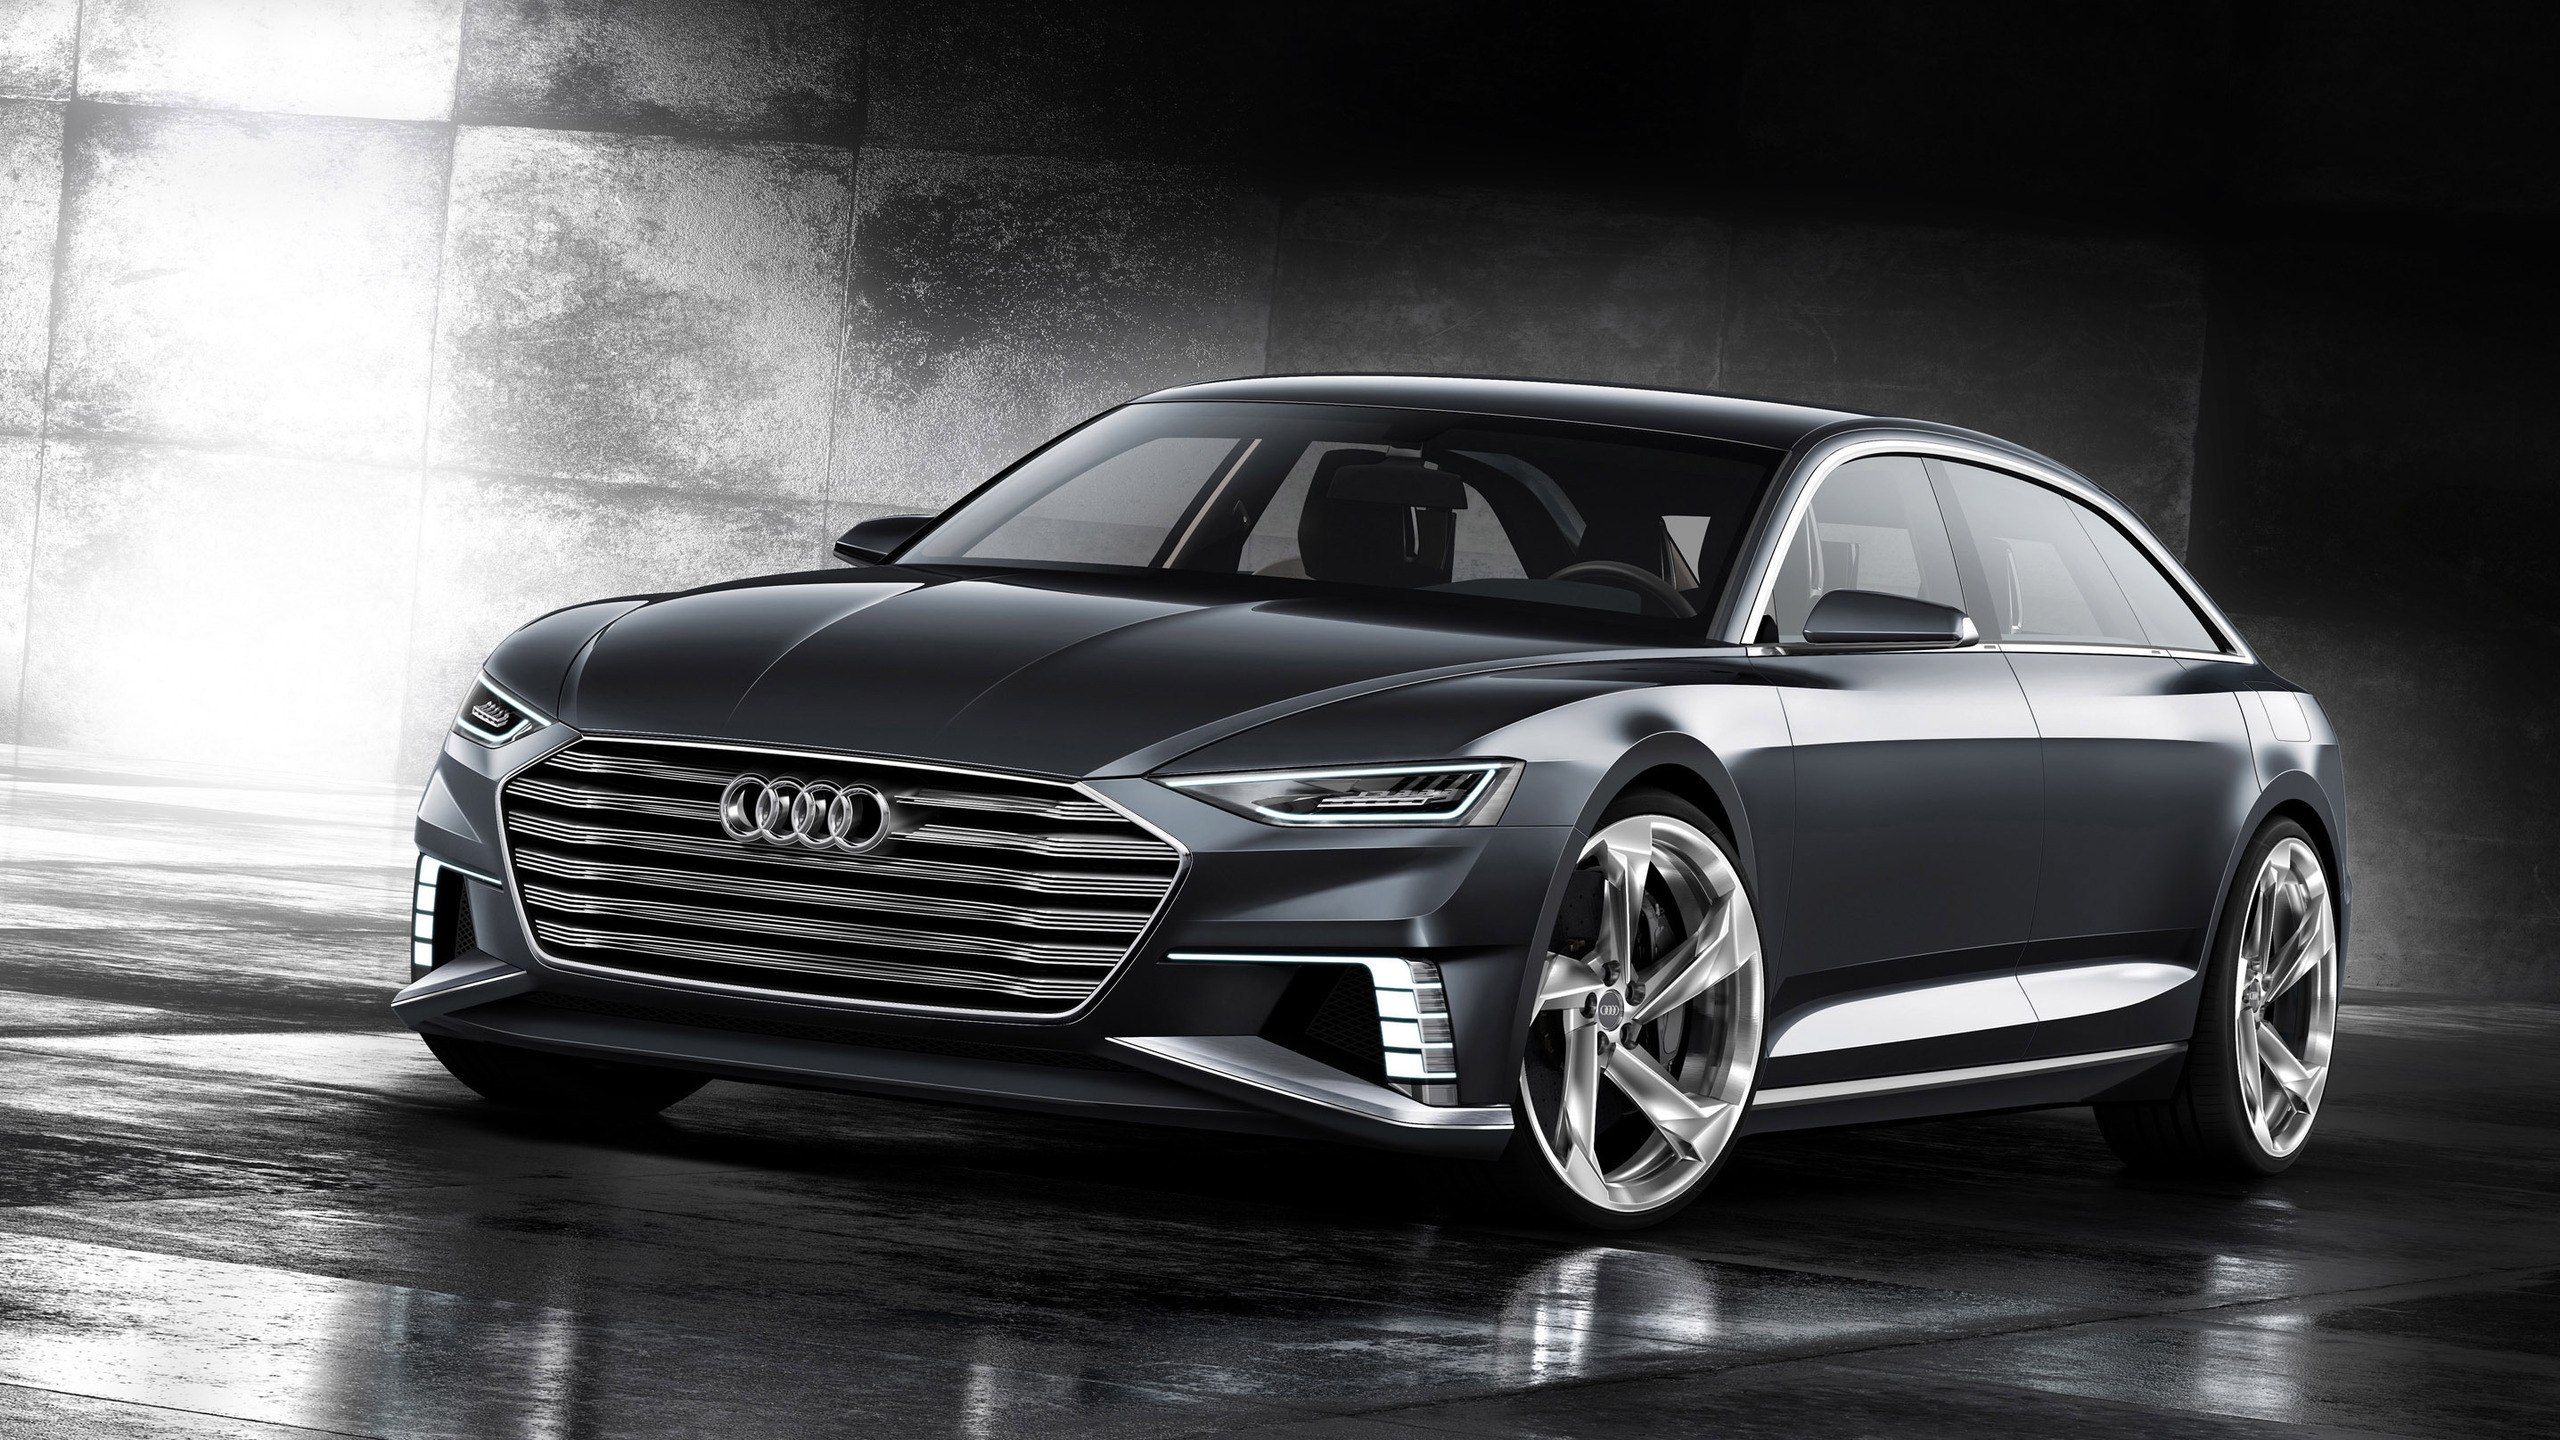 2015 Audi Prologue Avant Concept for 2560x1440 HDTV resolution